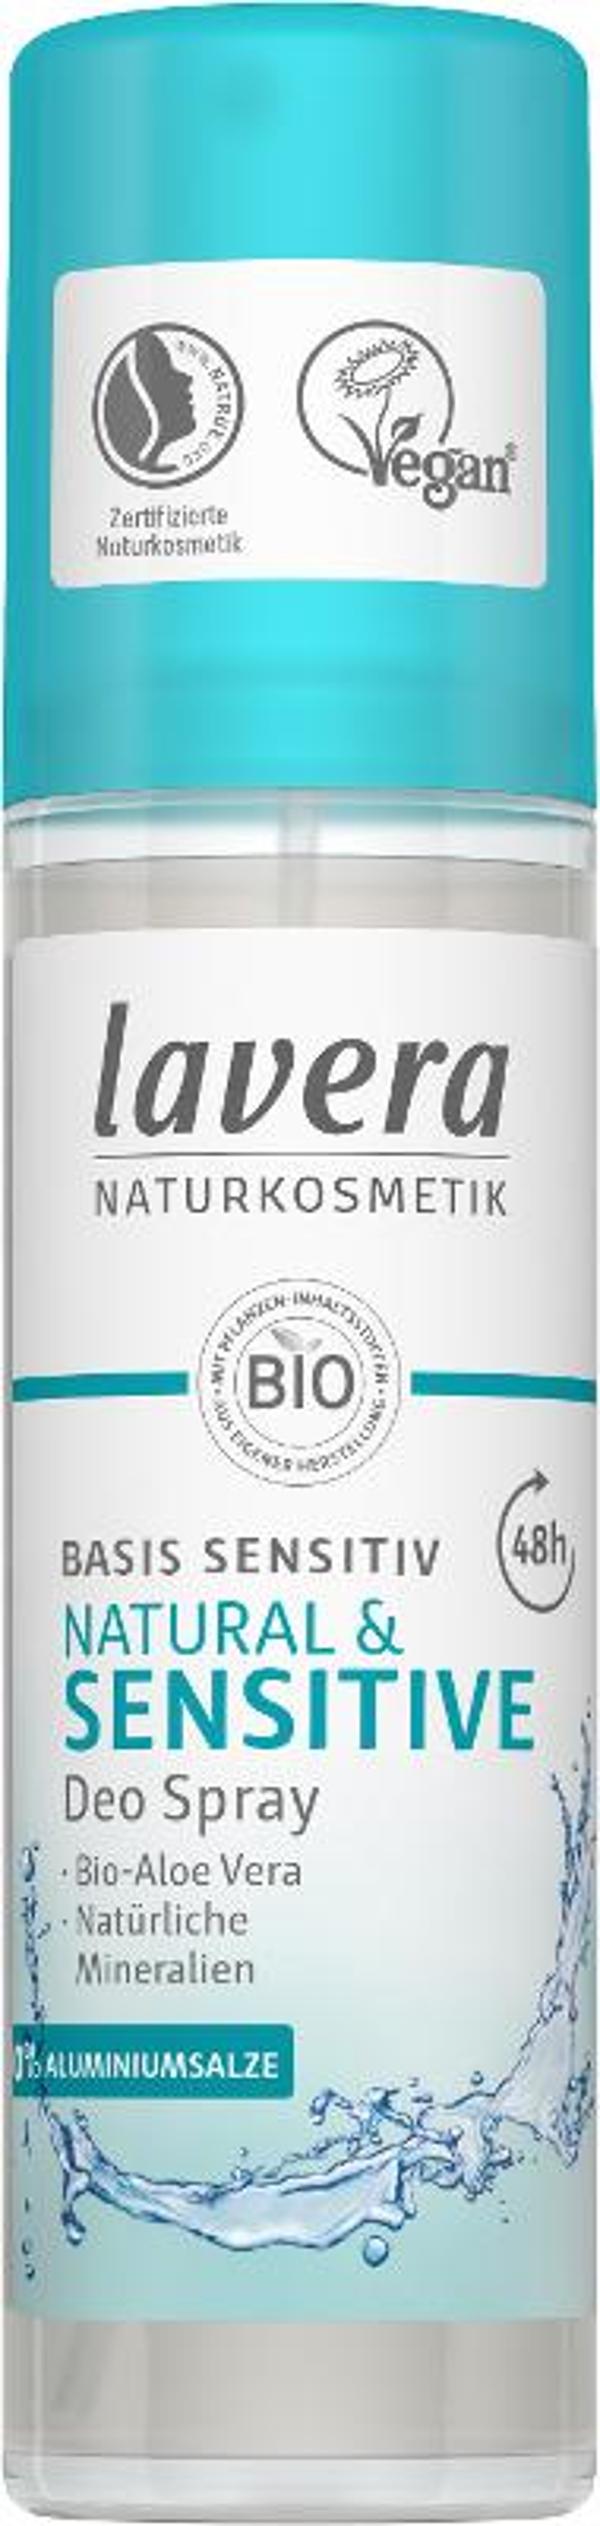 Produktfoto zu Lavera basis sensitiv Deodorant 75ml